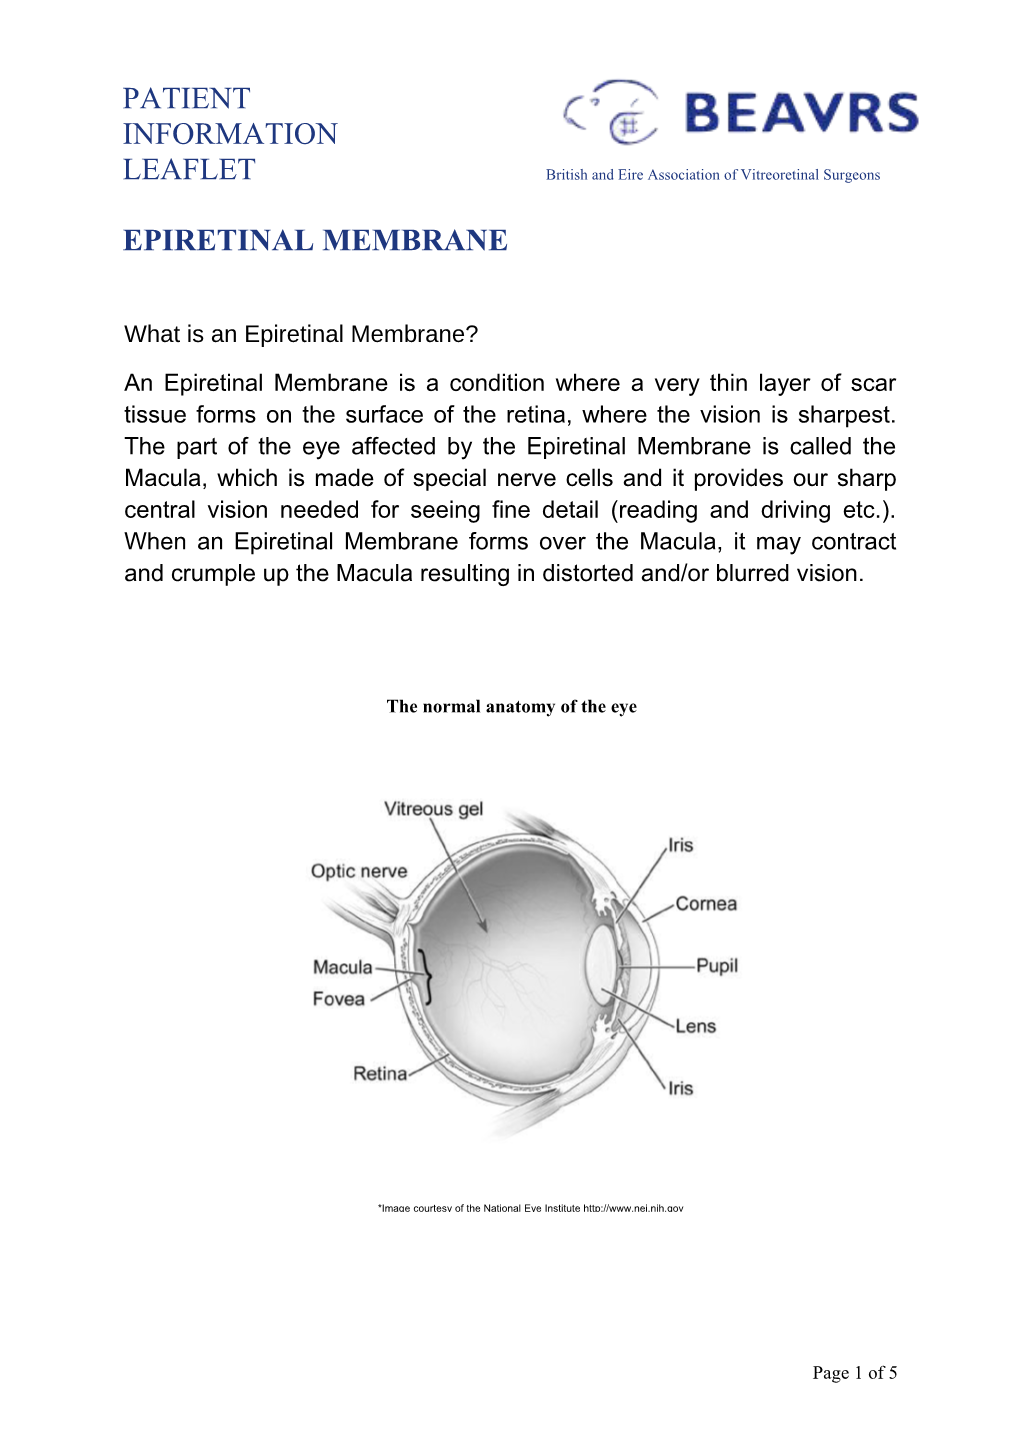 Epiretinal Membrane Leaflet